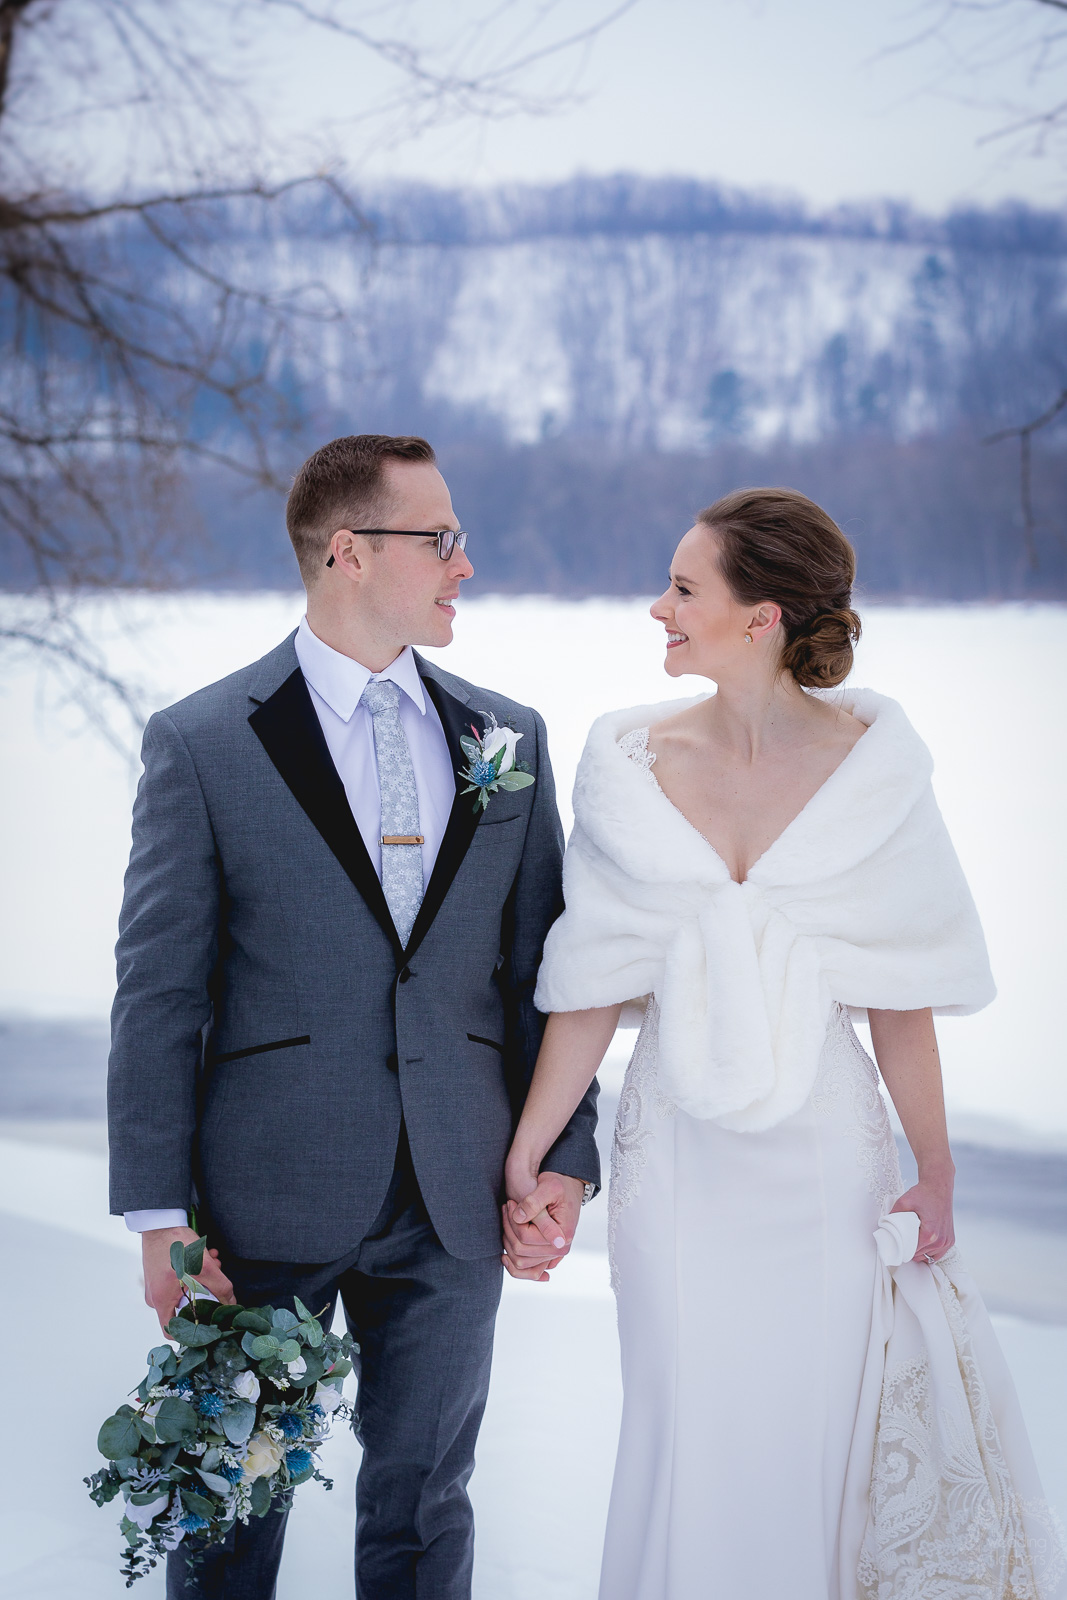 Elegant Winter Wedding Couple